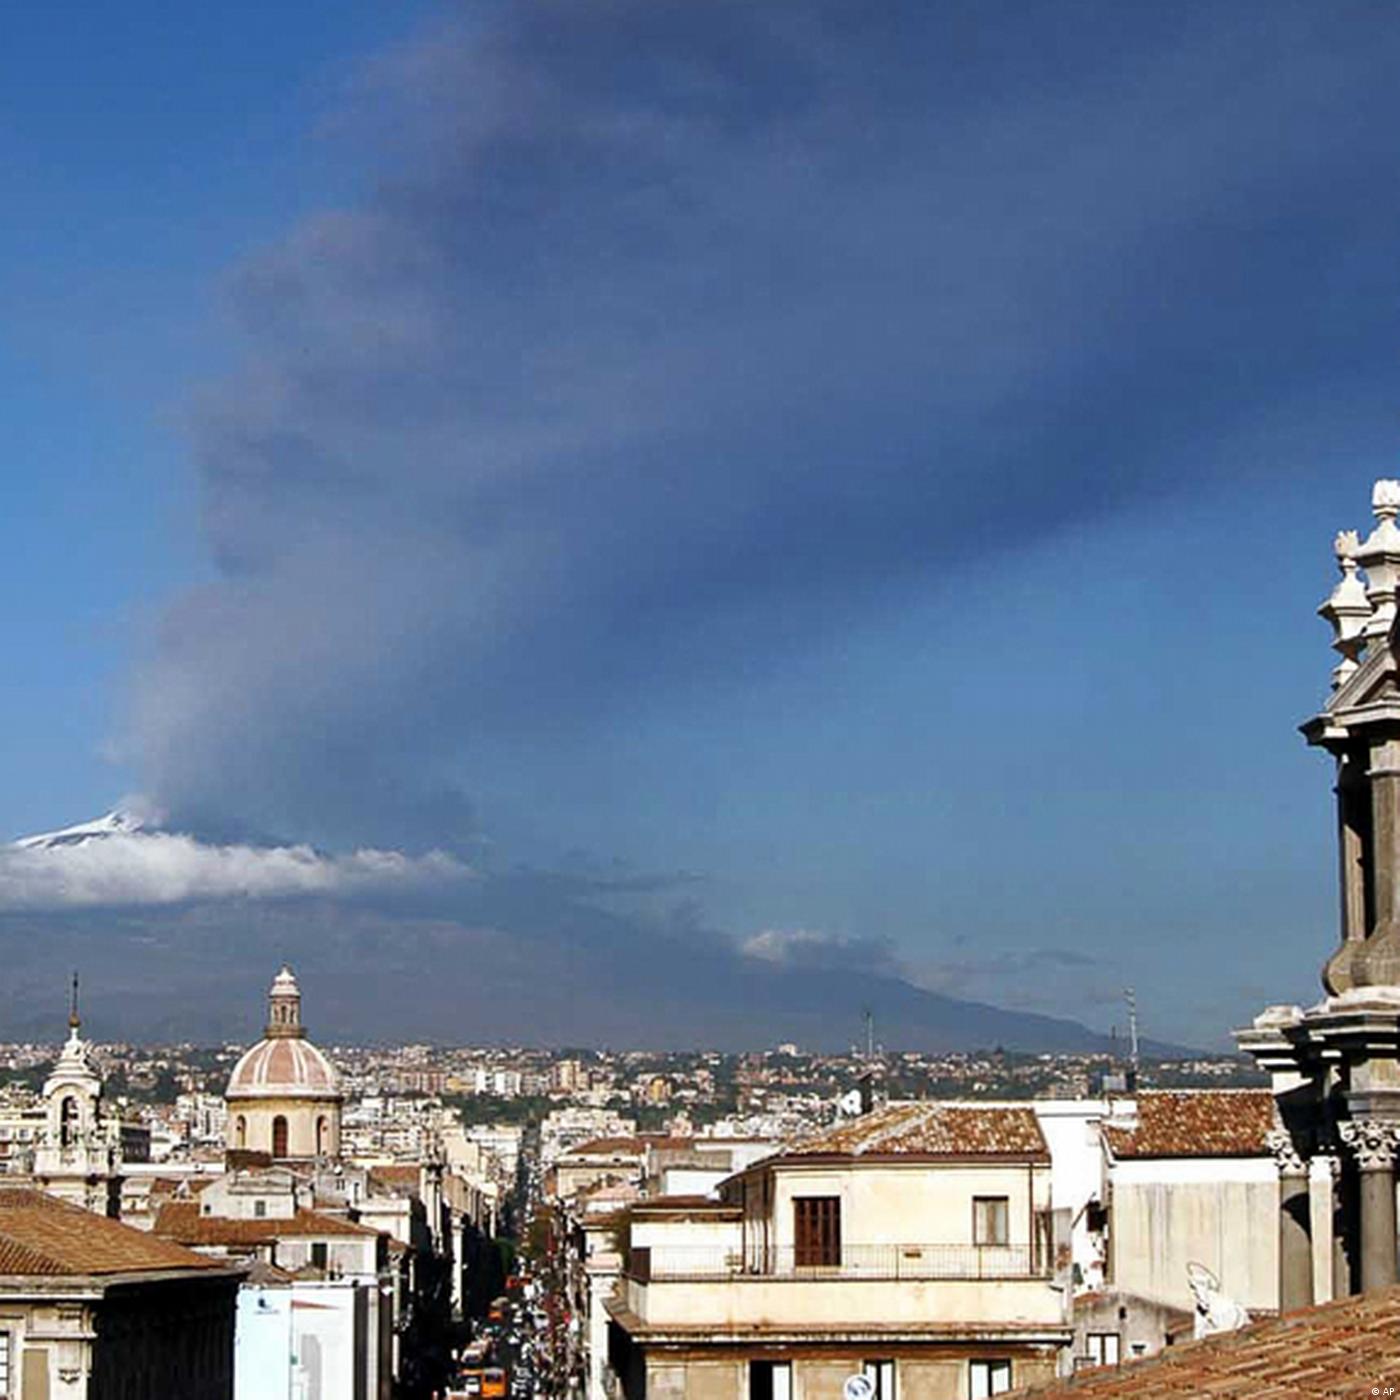 Italy: Europe’s Mightiest Volcano